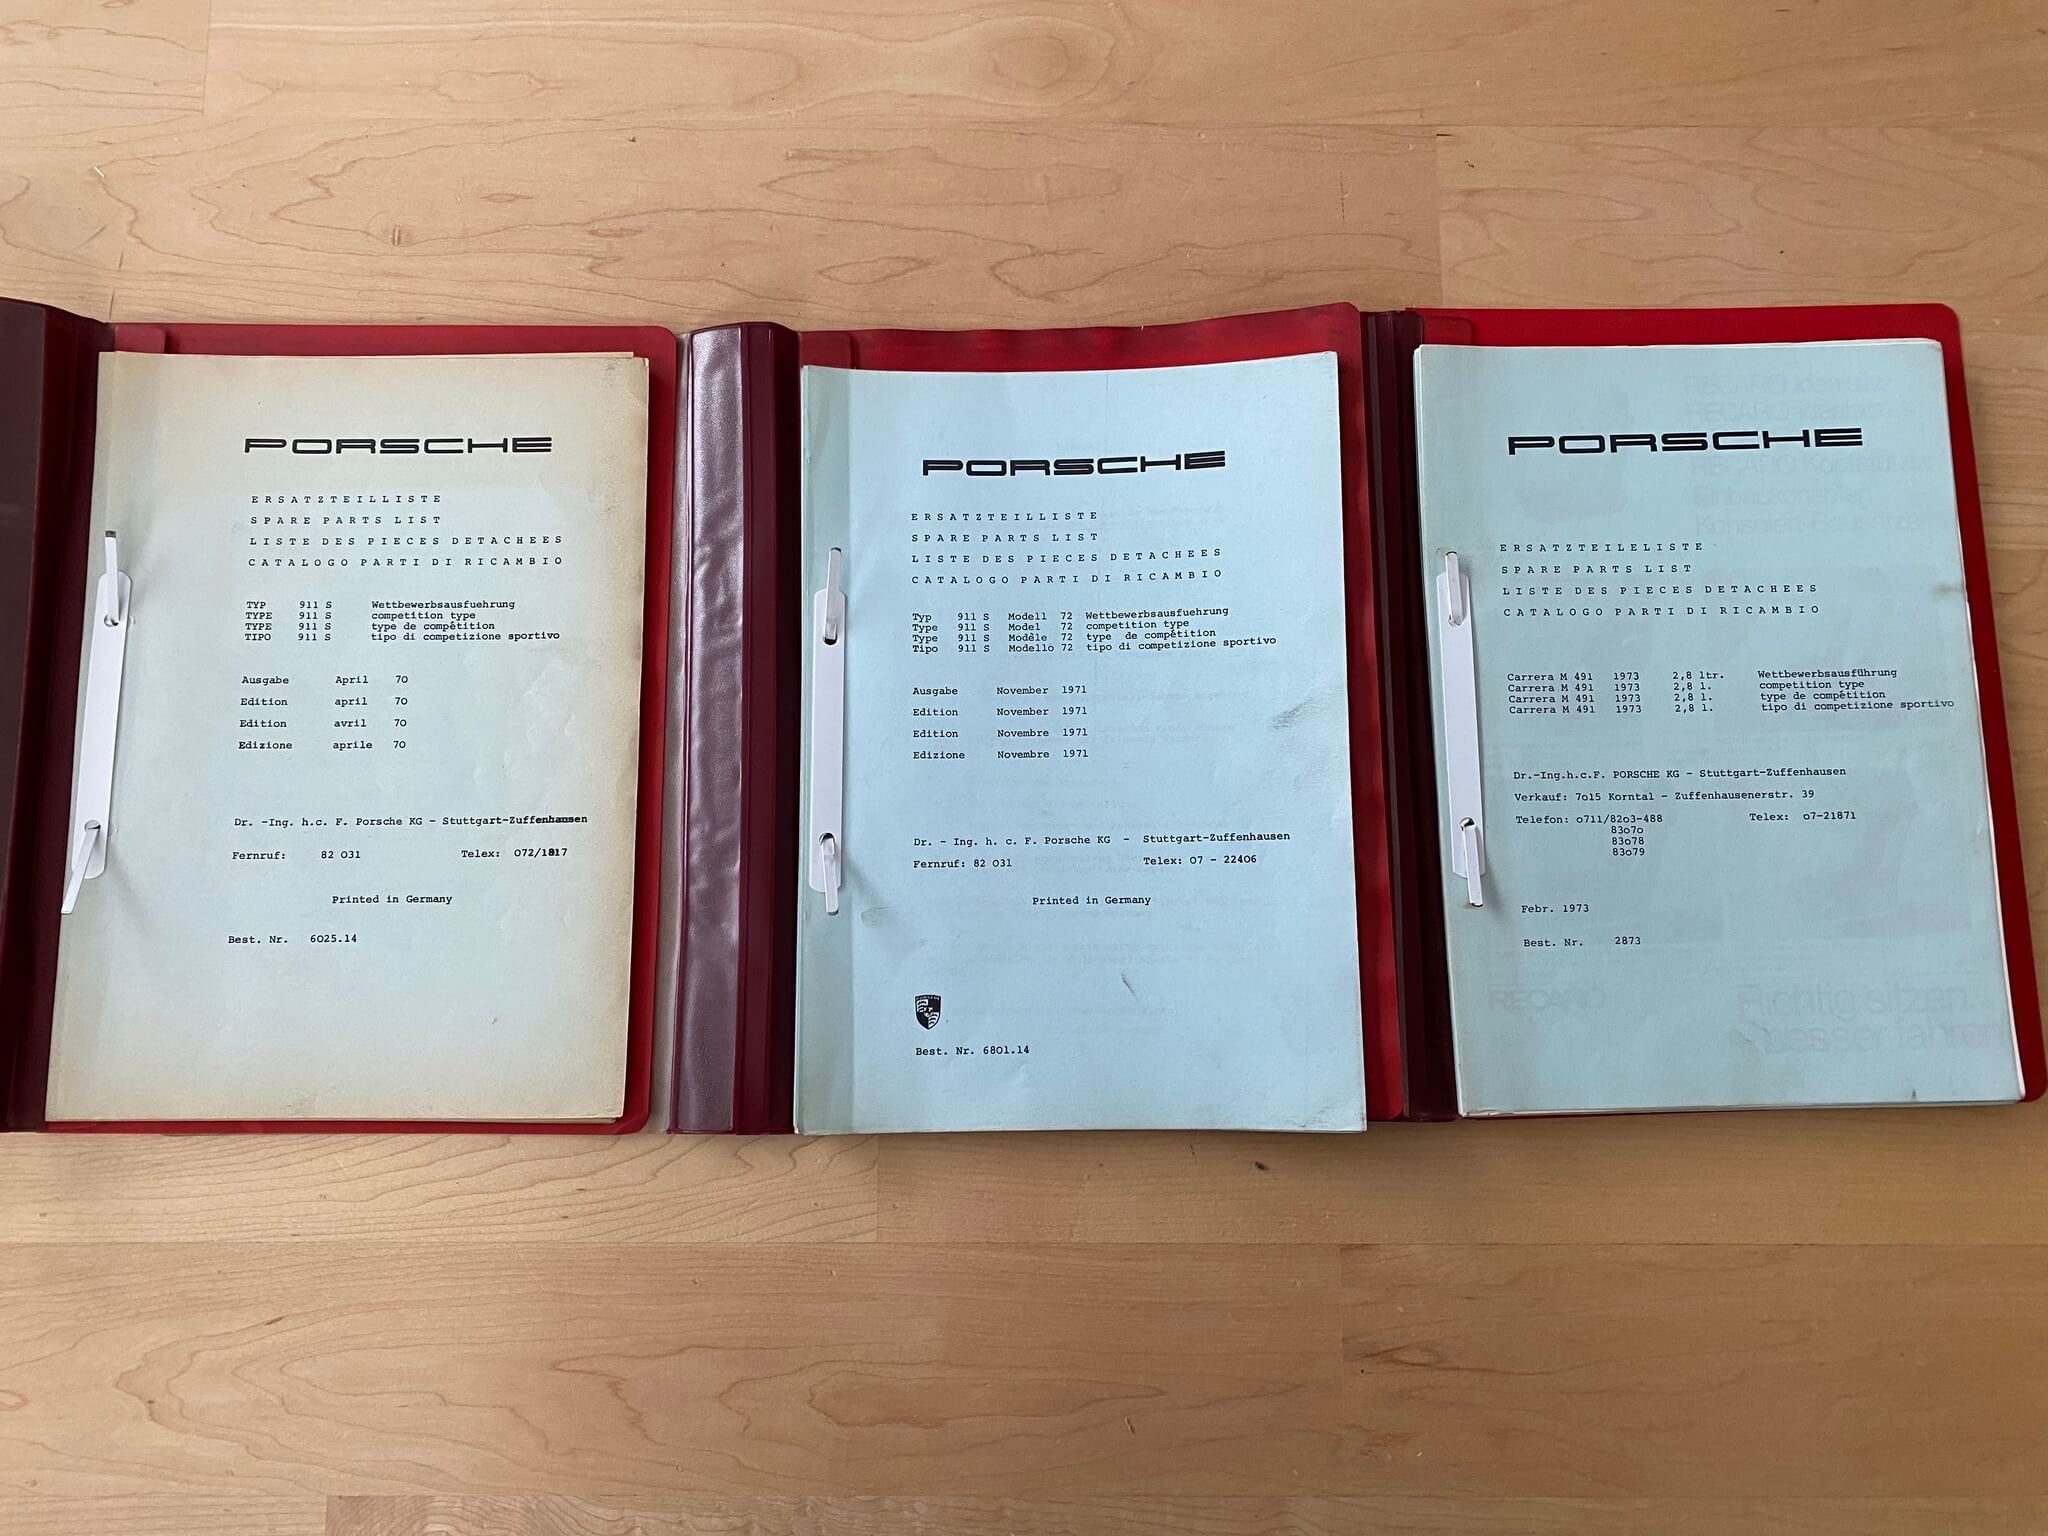  Collection of Original 1970s Porsche Spare Parts Catalogs